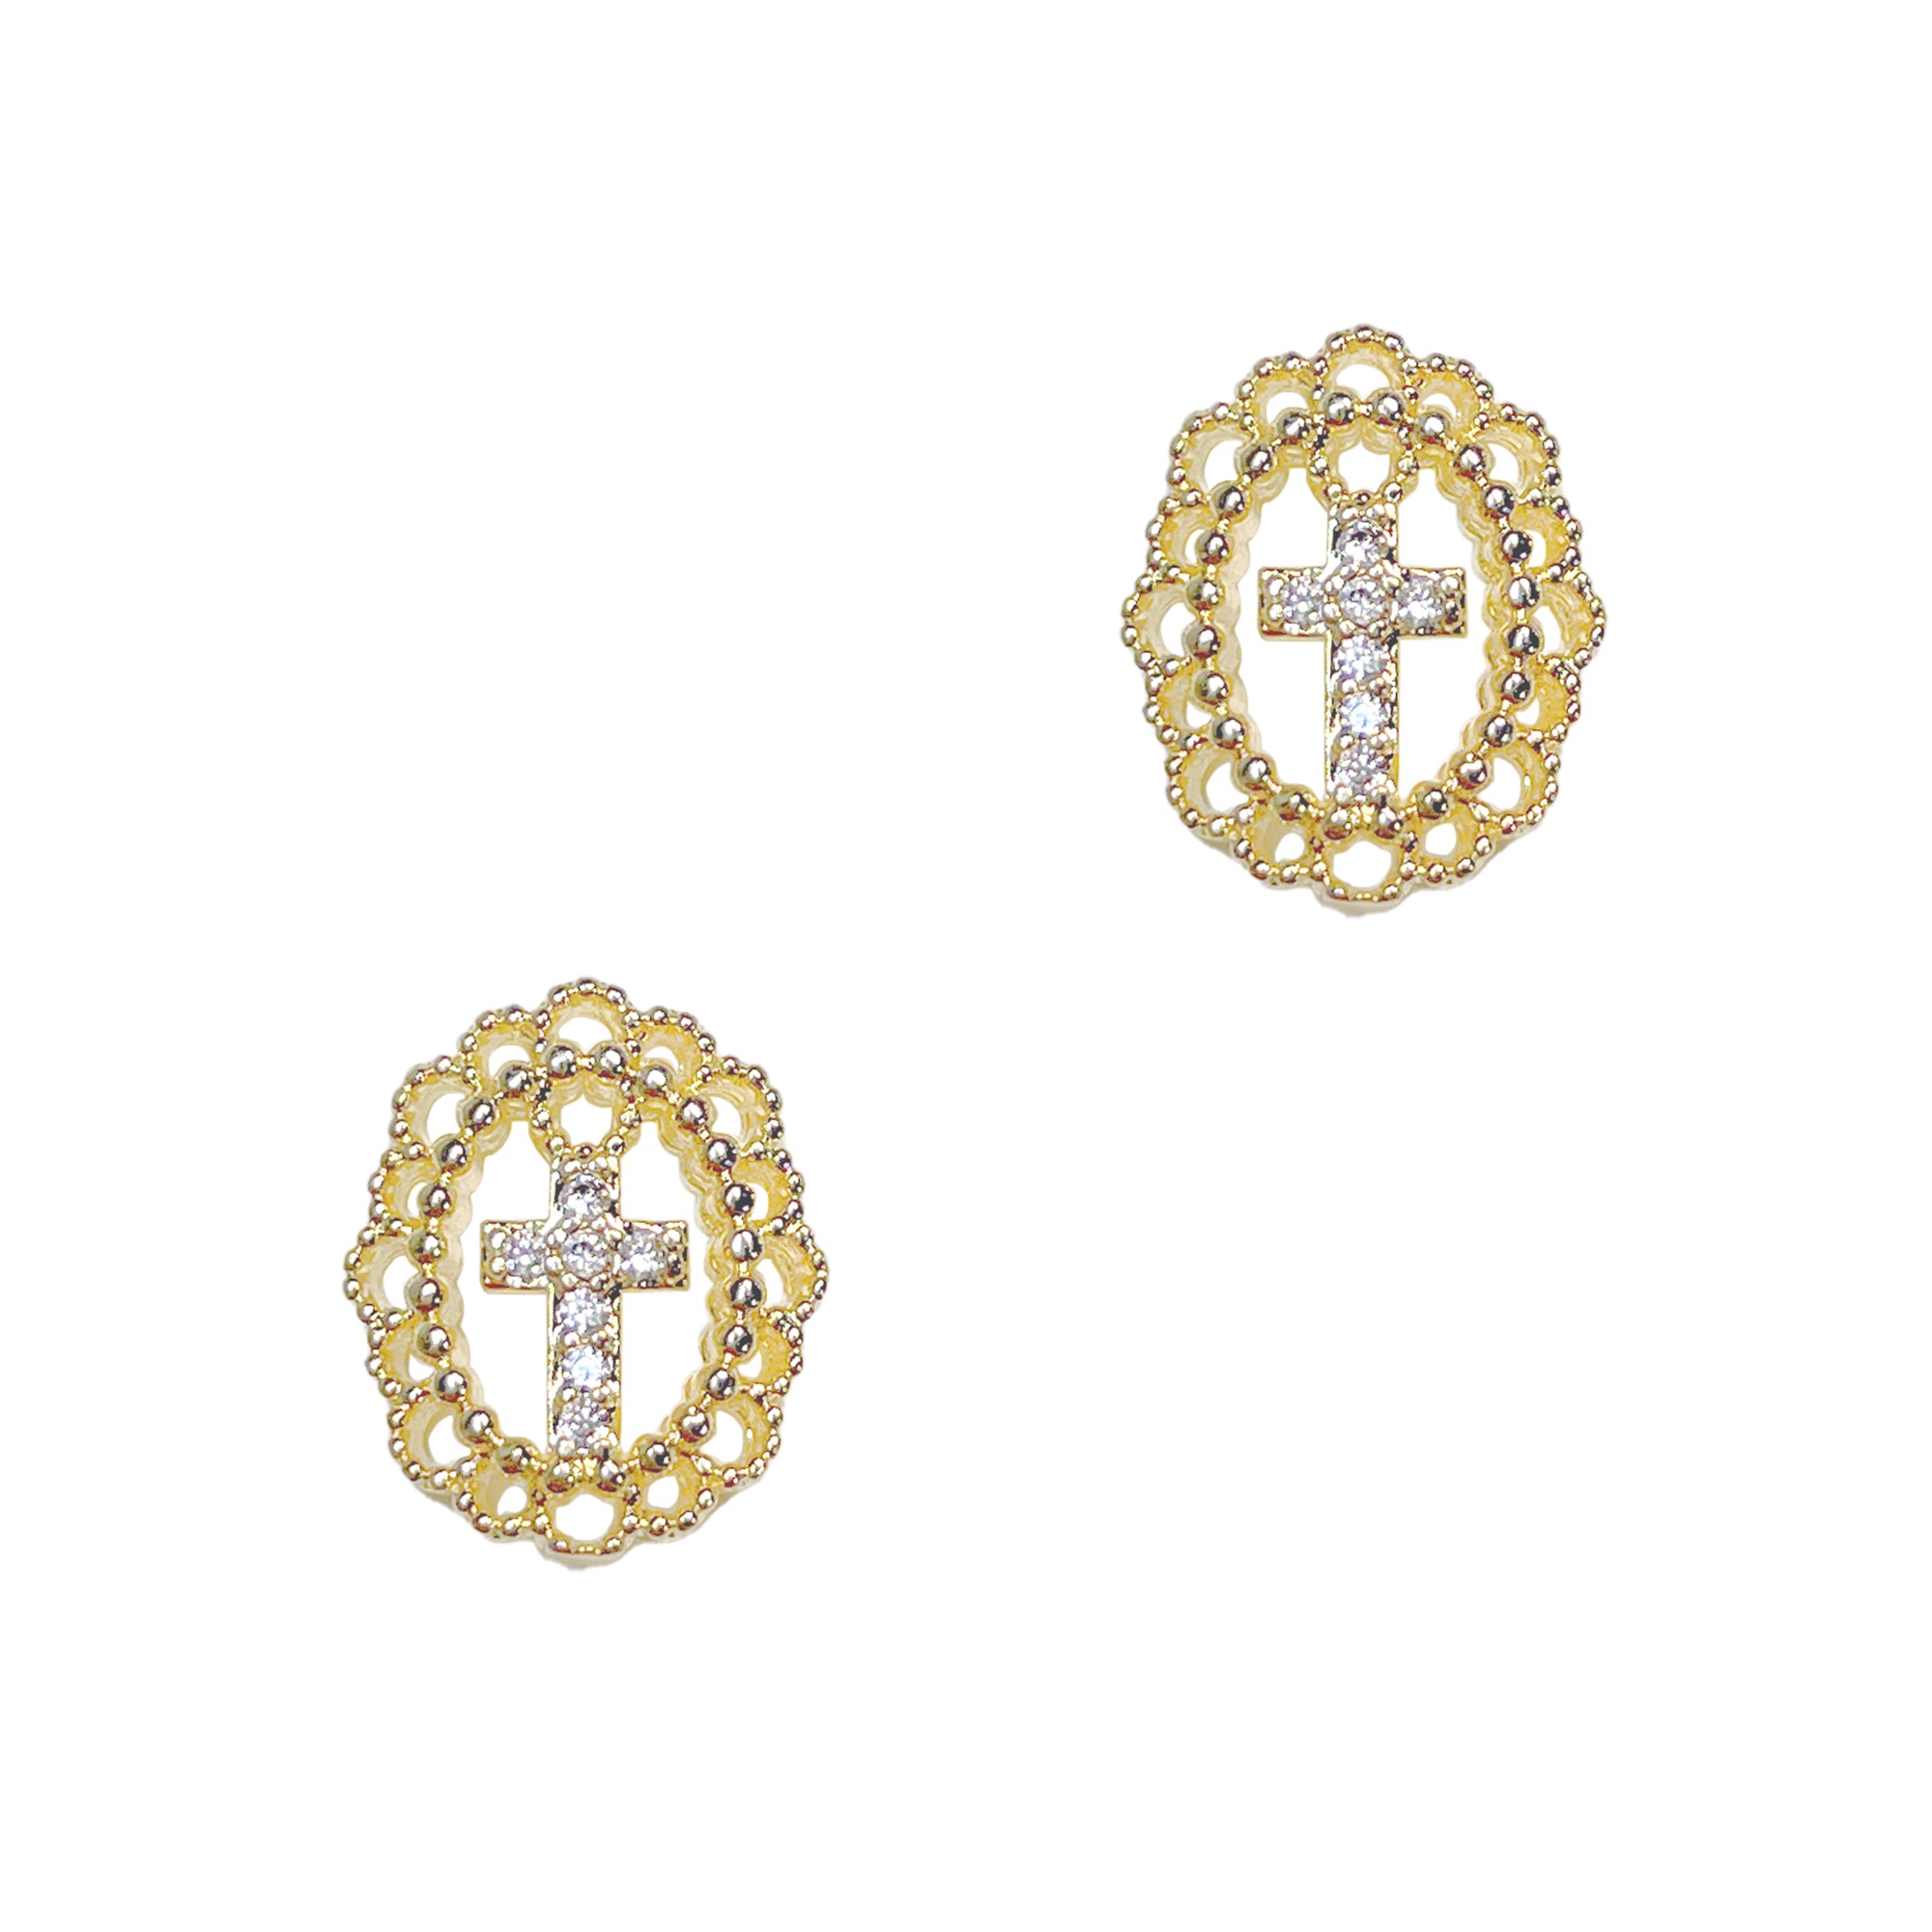 Lacy Cross Emblem / Zircon Charm / Gold Nail Charm Jewelry